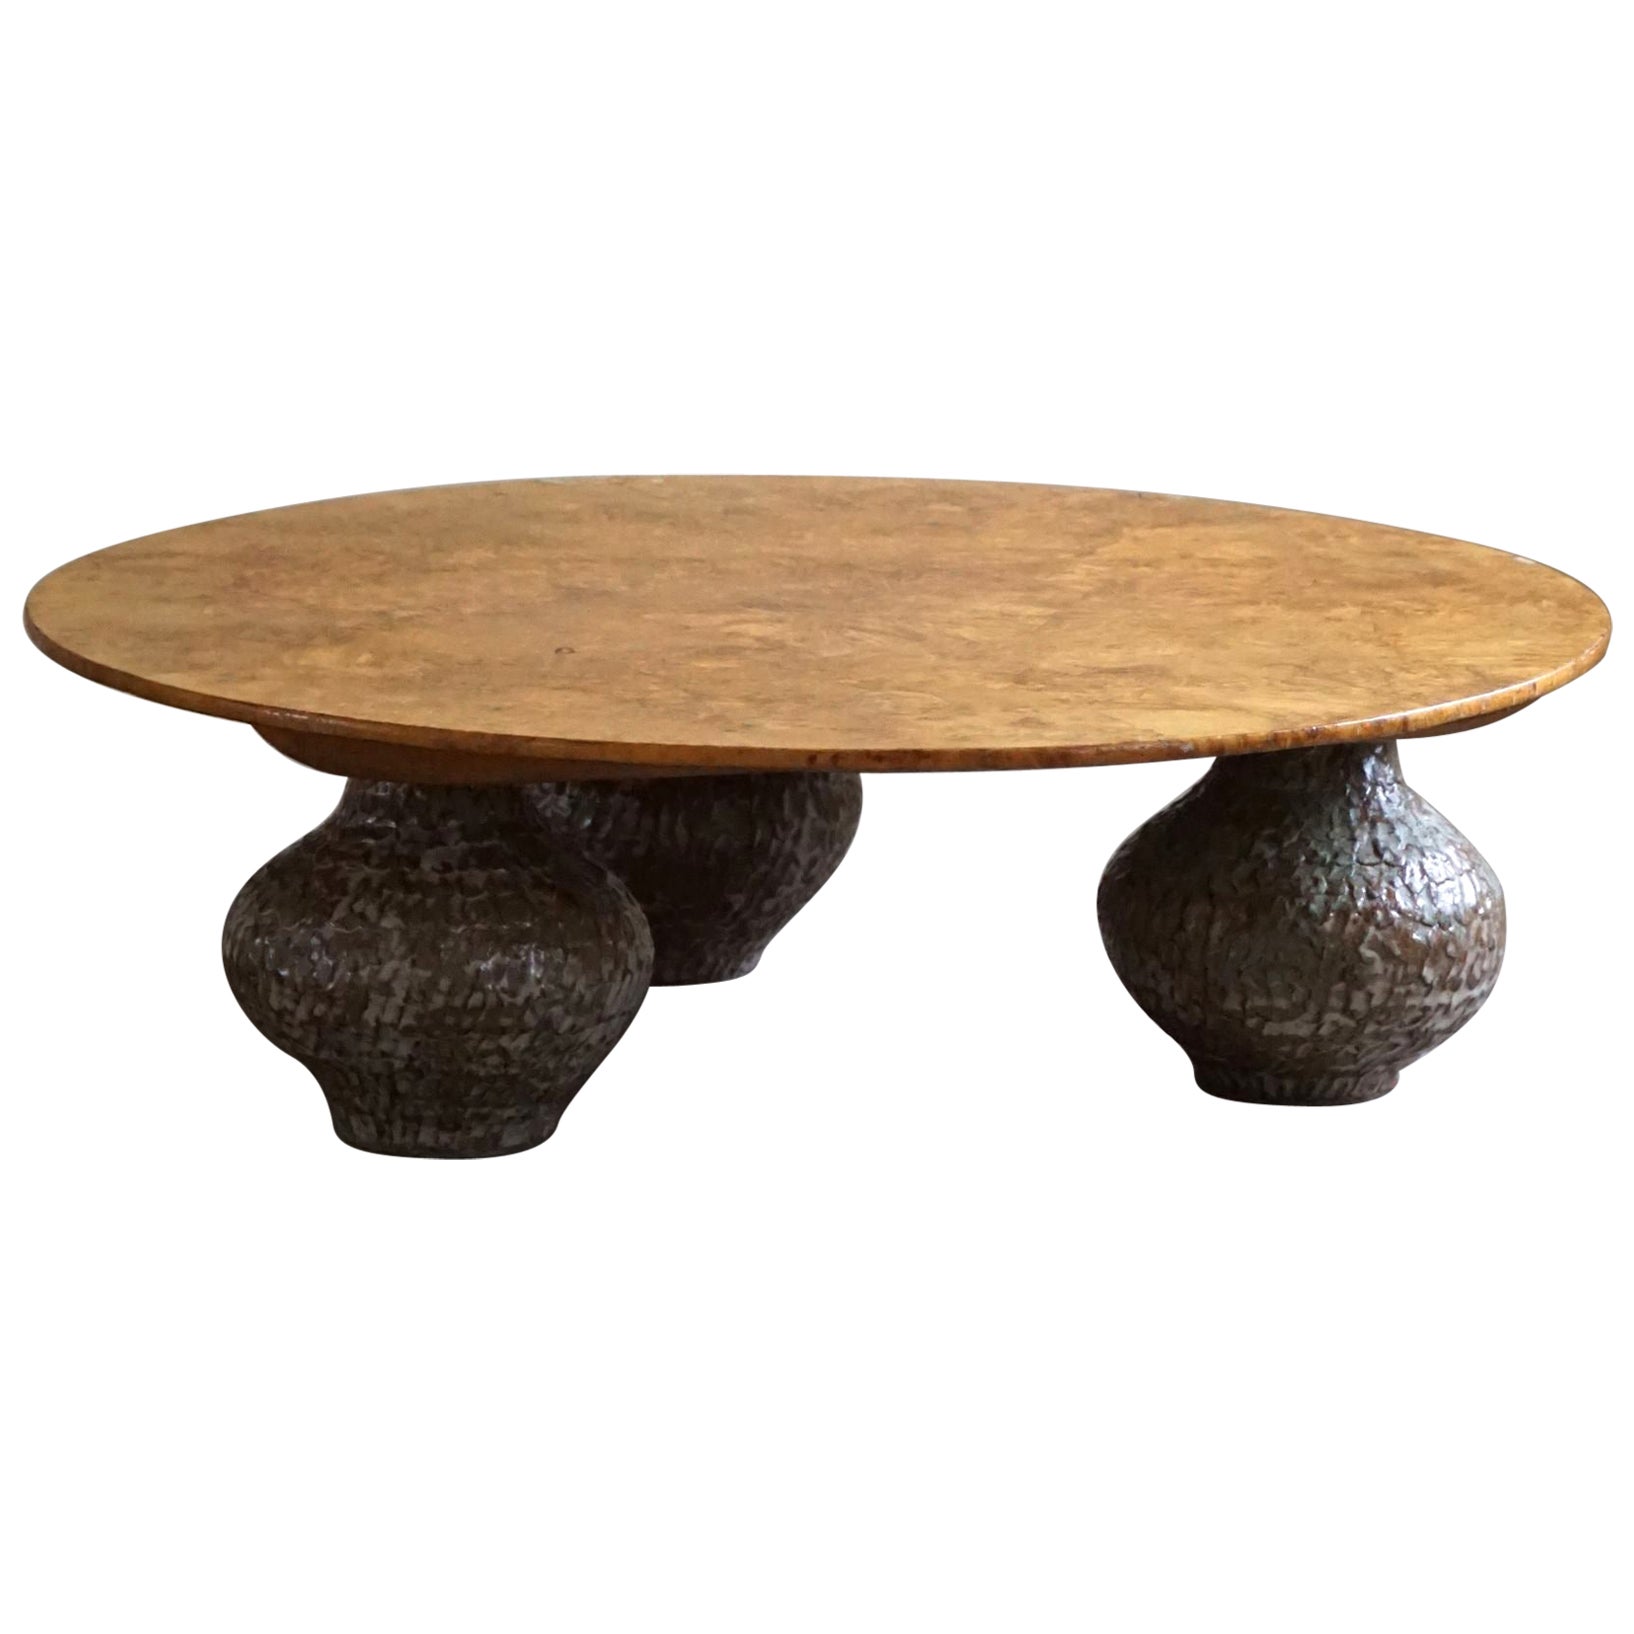 A Burl Table by eliaselias x Ole Victor, Ceramic & Birch, Danish Design, 2023